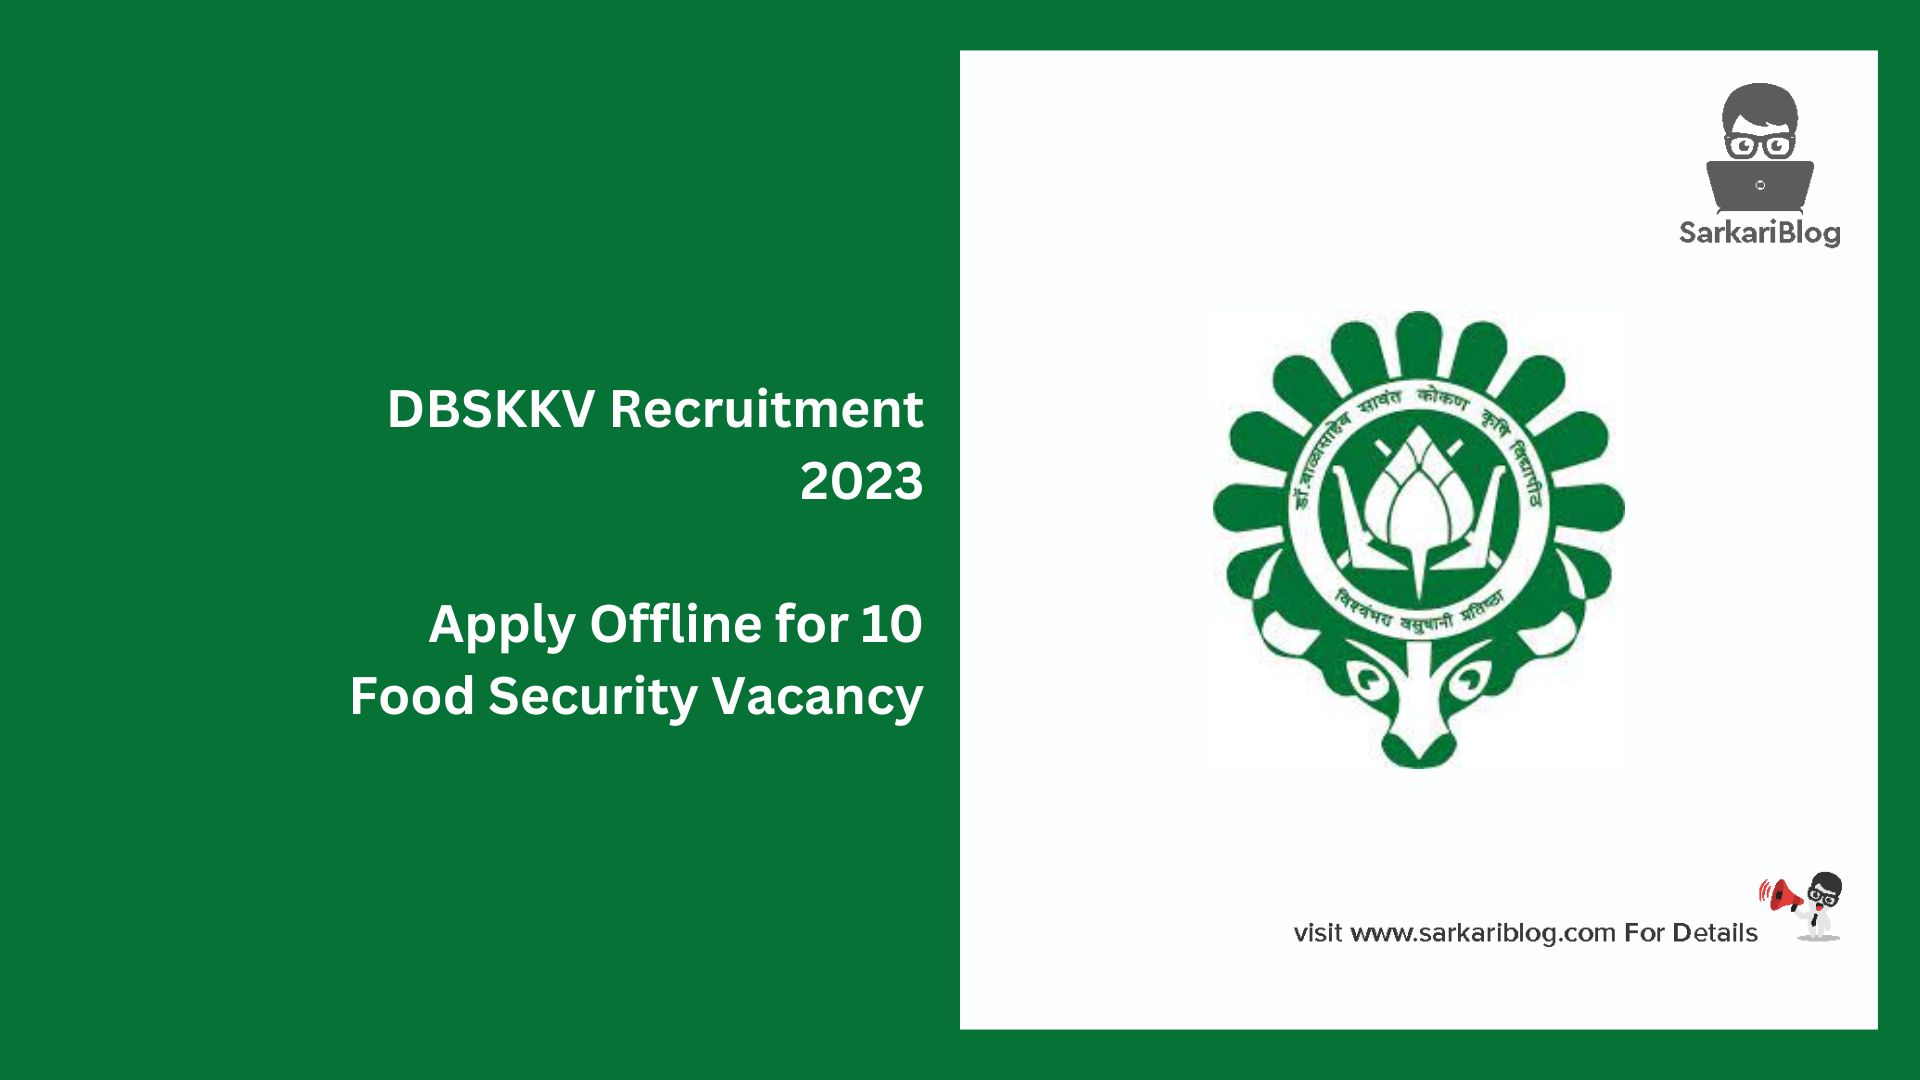 DBSKKV Recruitment 2023